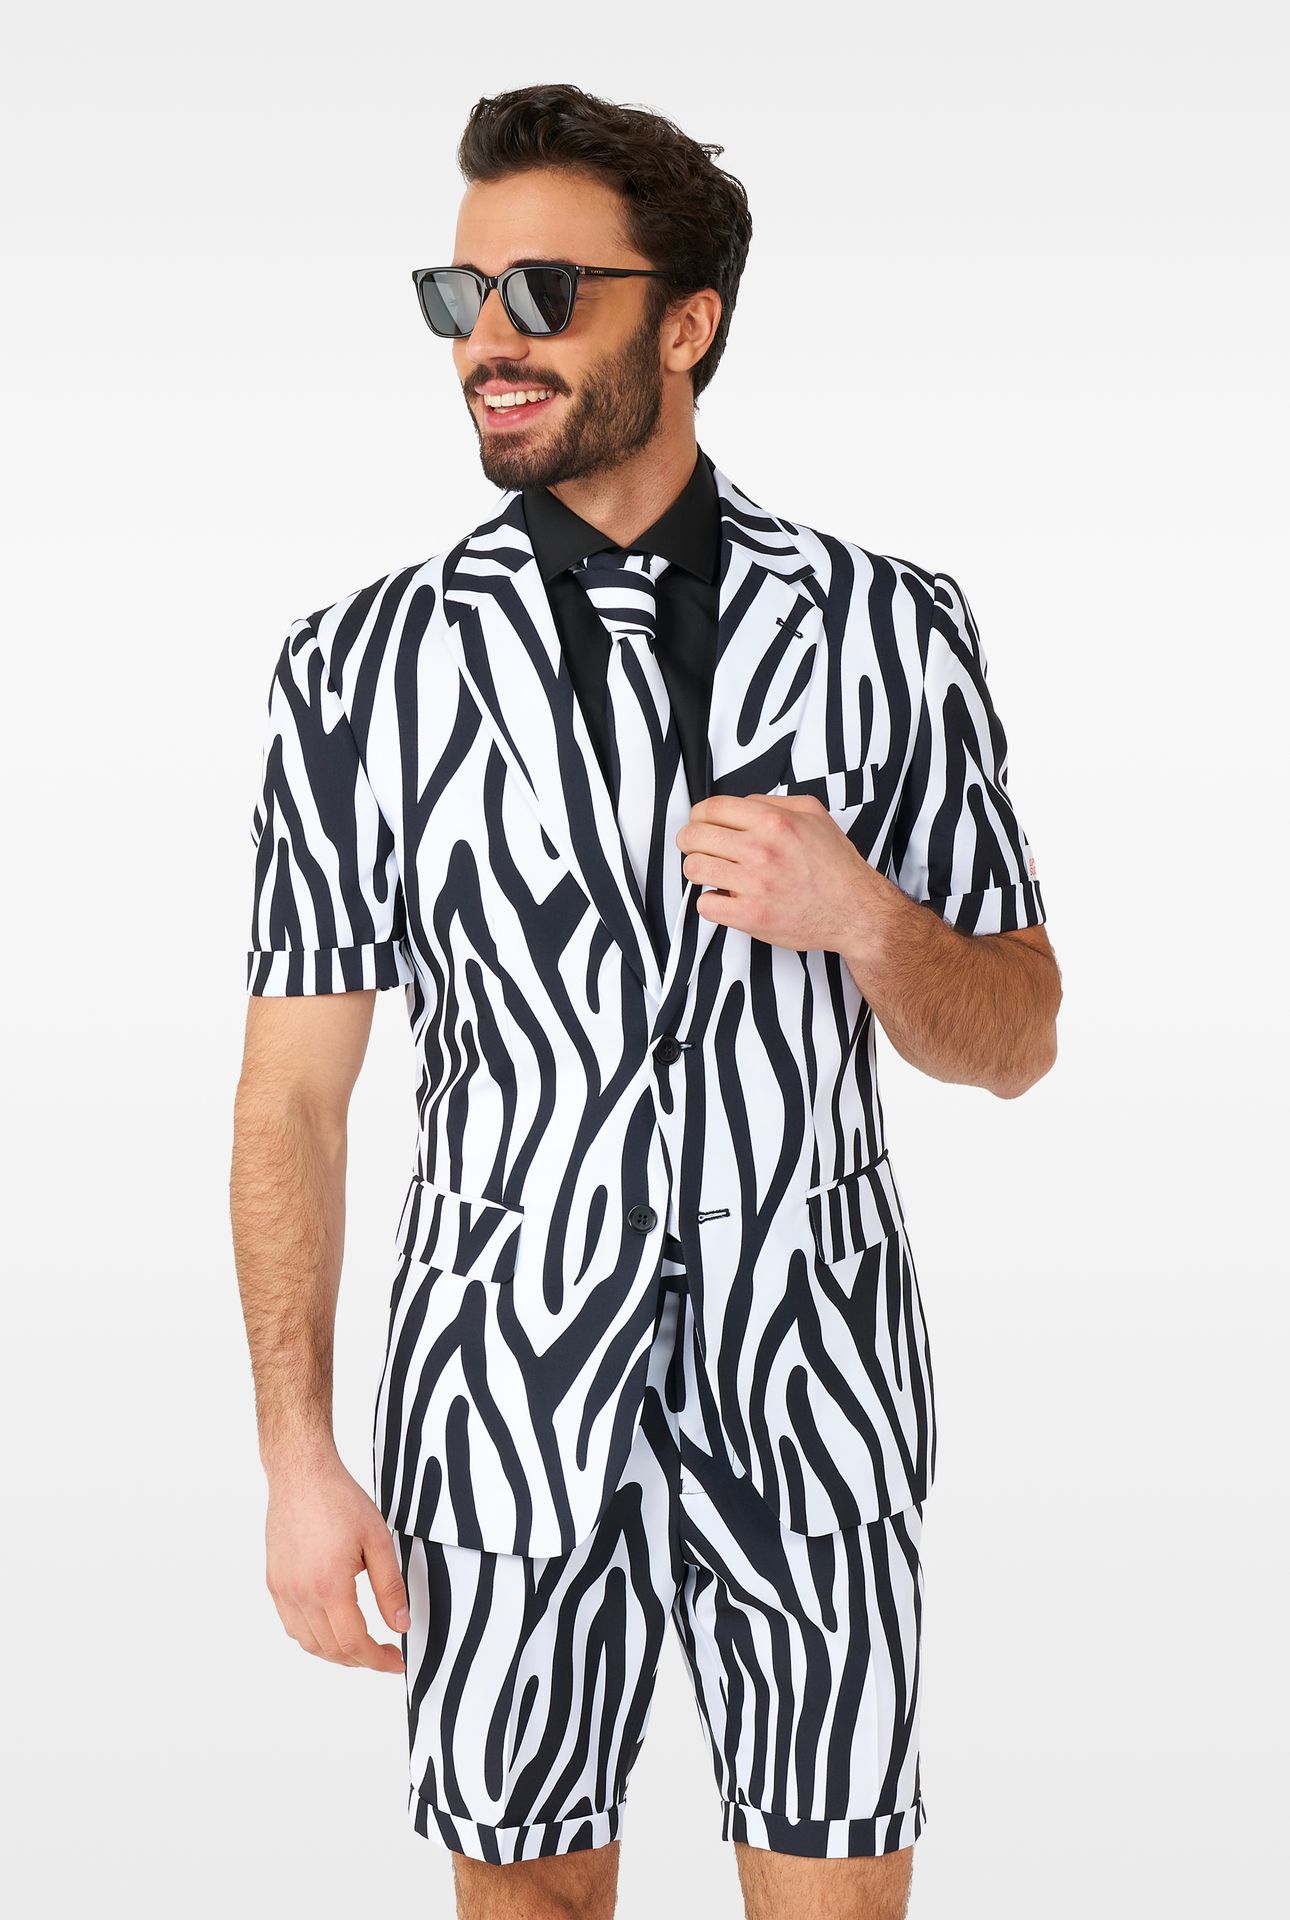 Opposuits Zomer Zazzy Zebra suit Heren